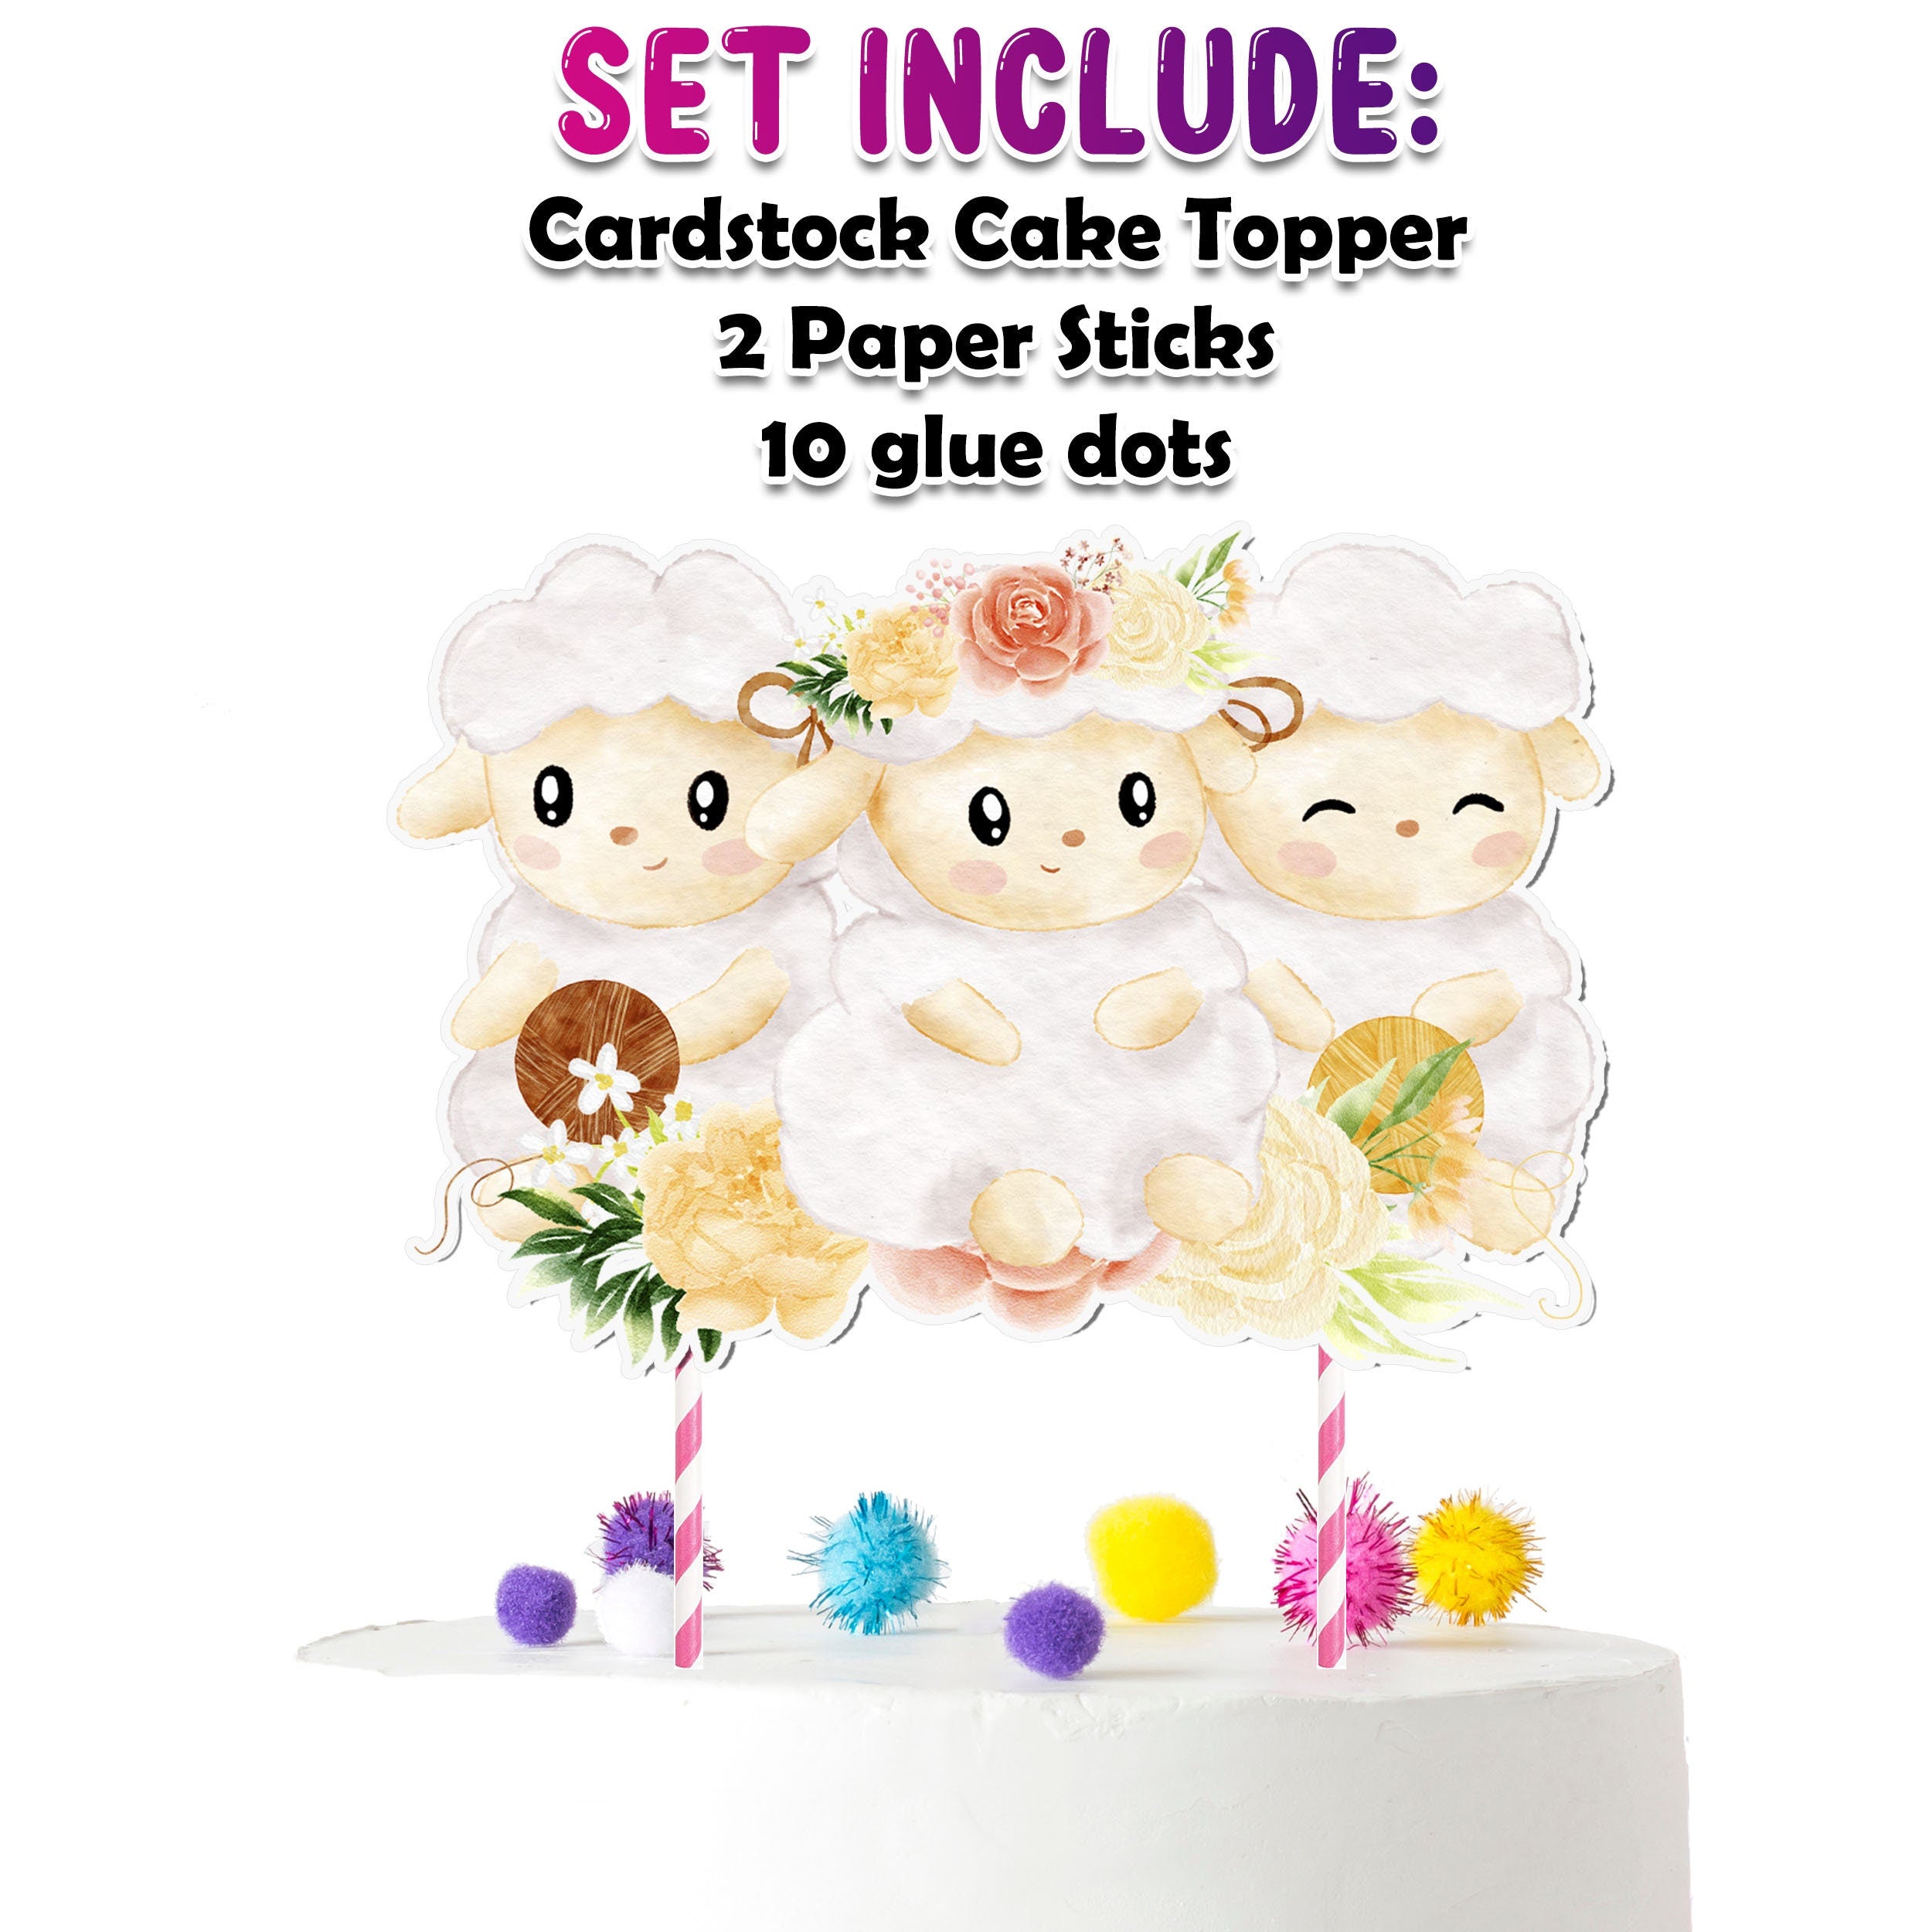 Sweet Sheep Serenade - Adorable Sheep Cartoon Cake Topper for Birthdays